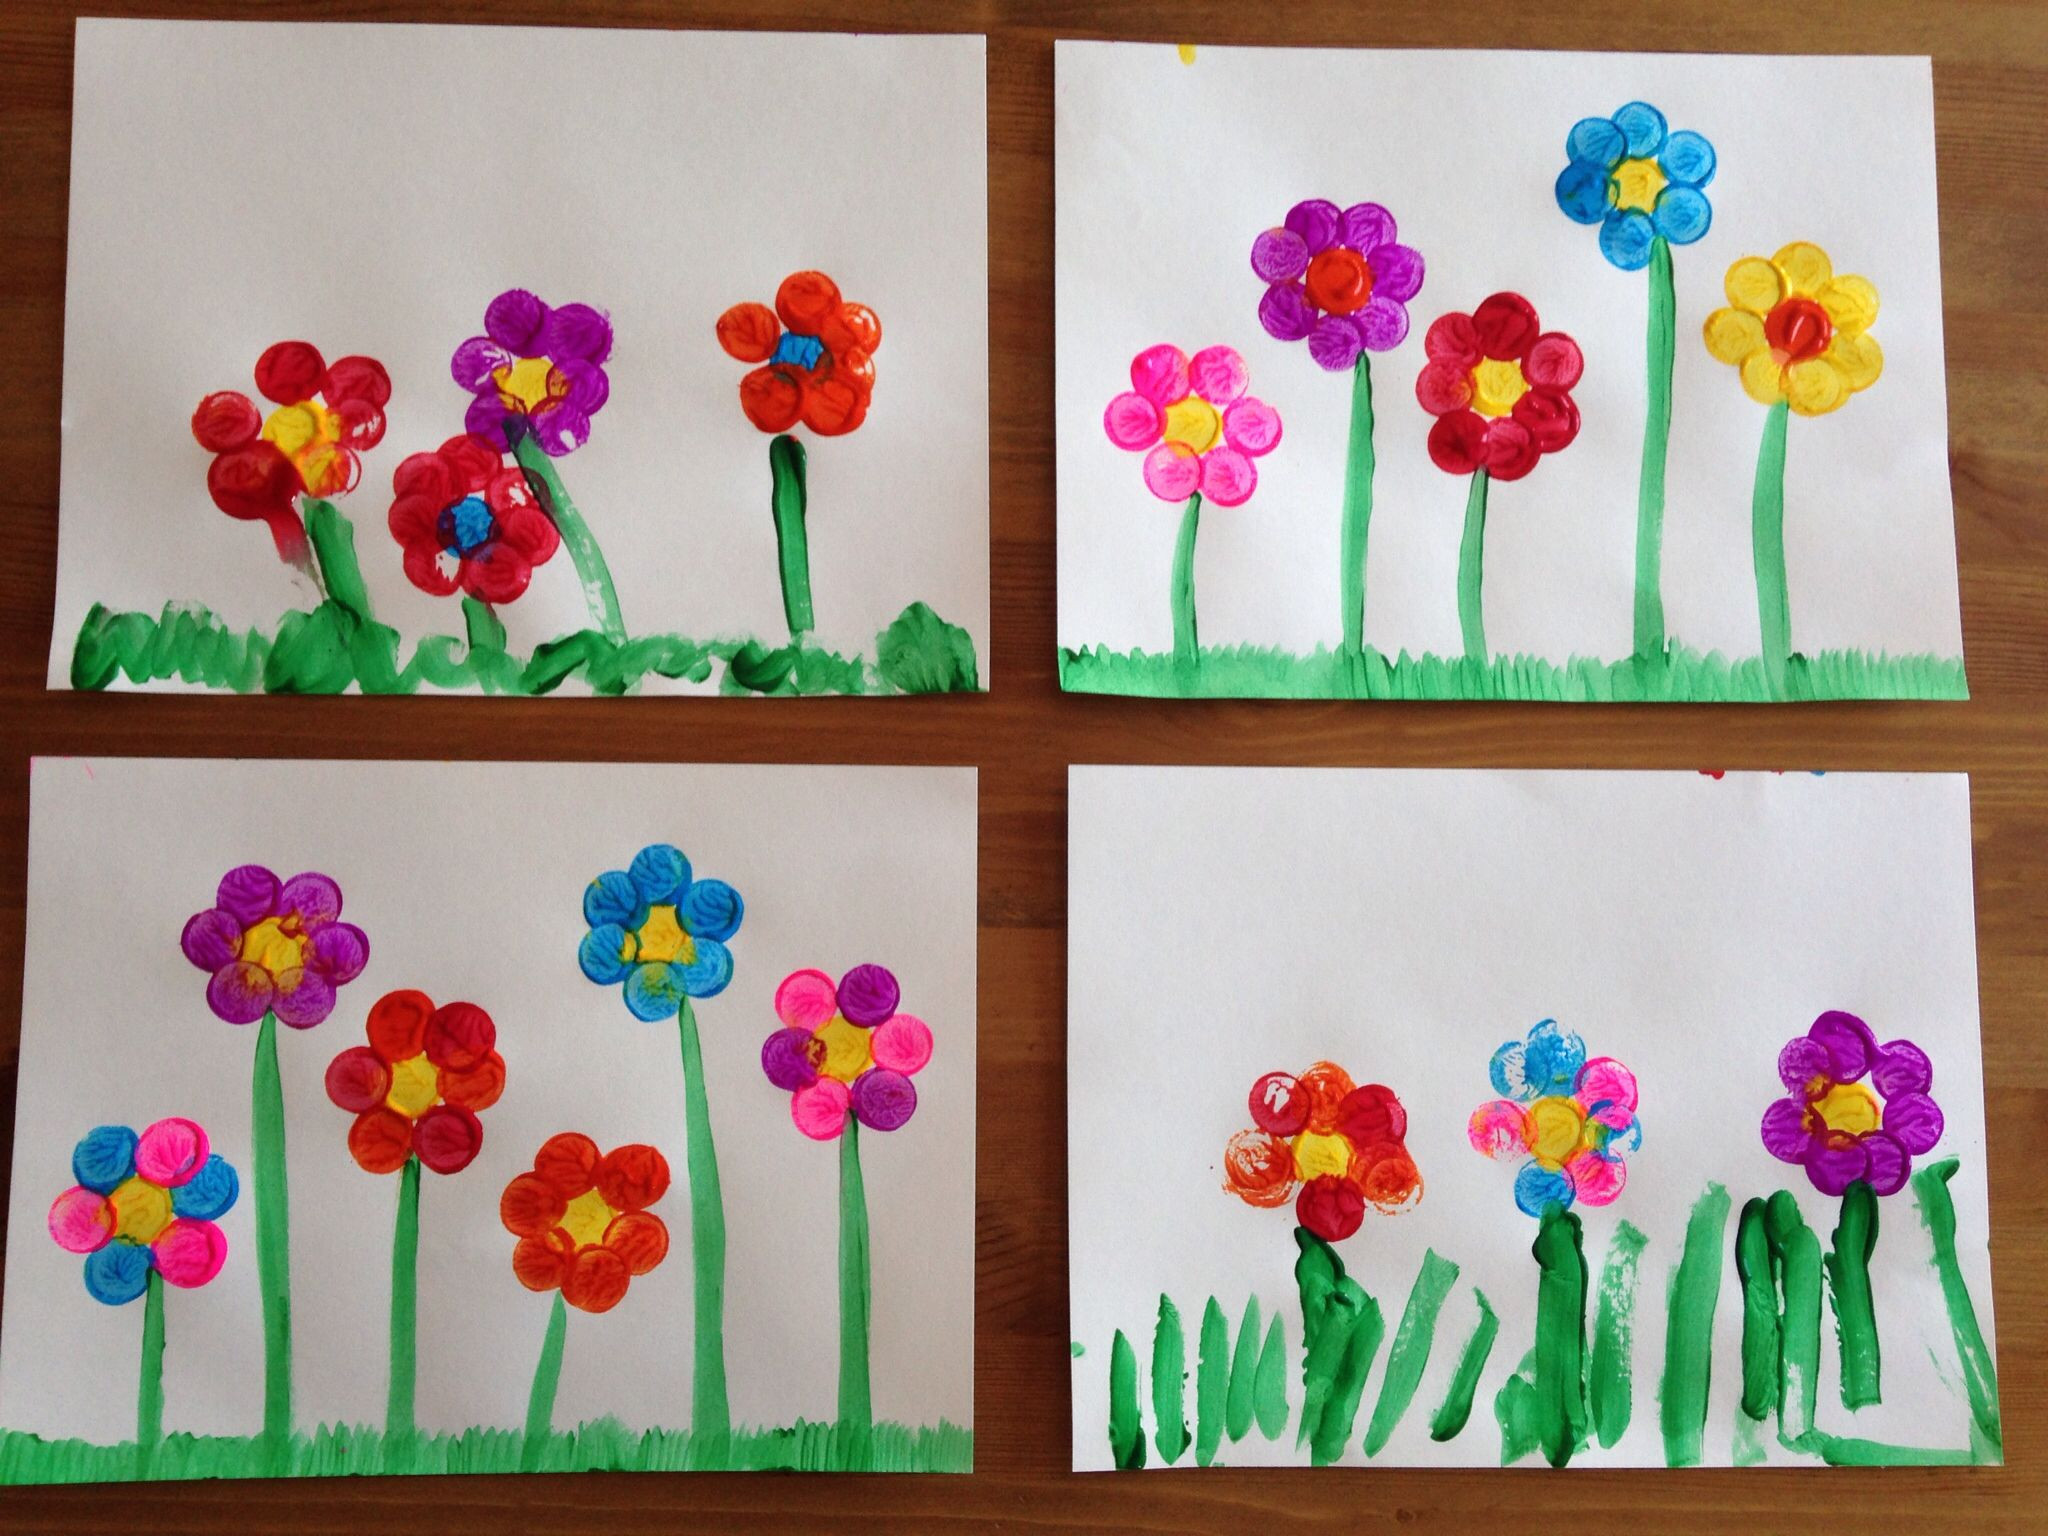 Best ideas about Preschool Spring Craft
. Save or Pin Cork Flower Painting Spring Craft Preschool Craft Now.